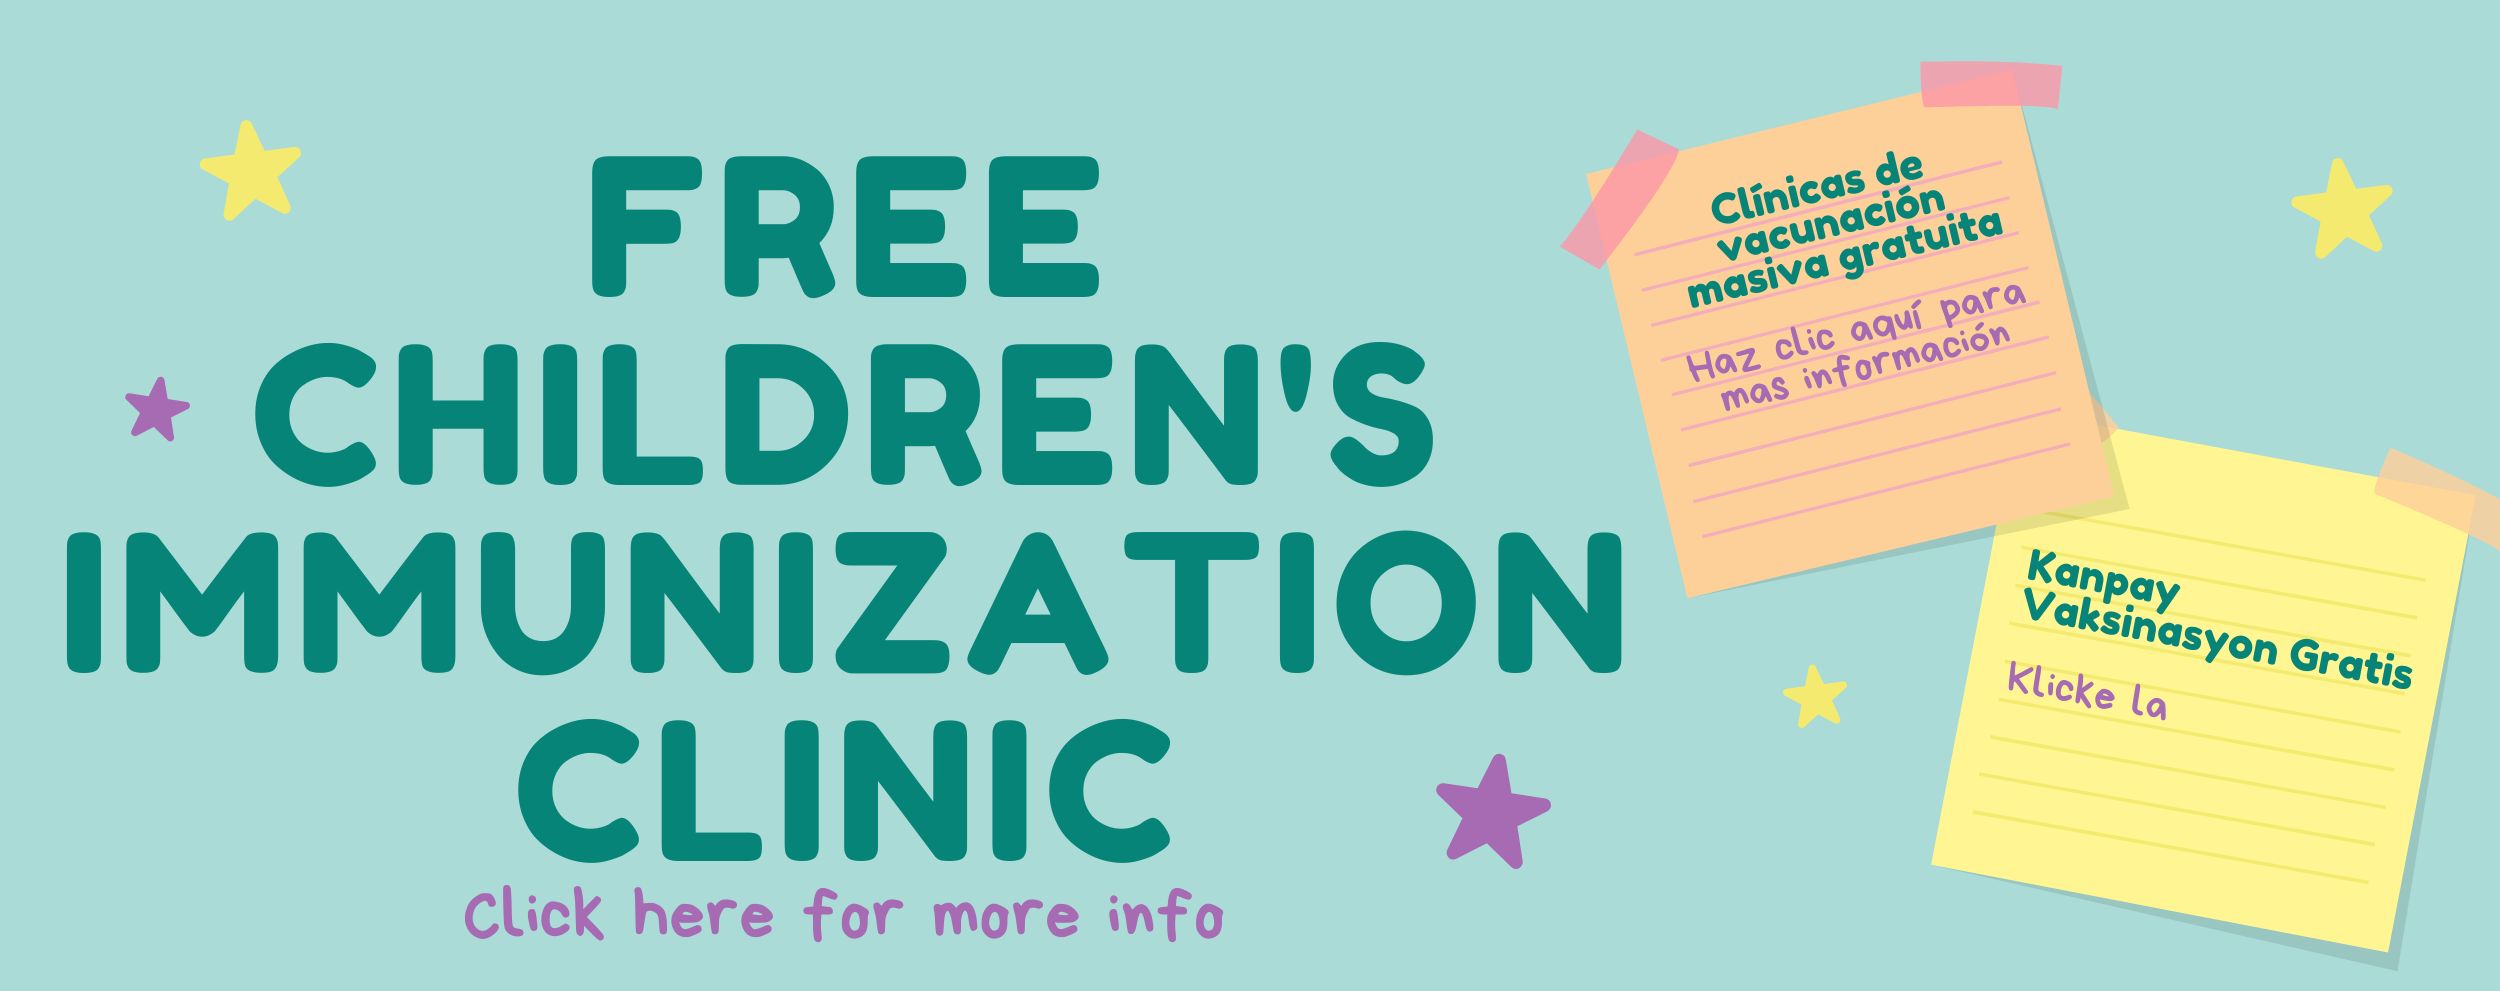 Free Children's Immunization clinics. Clínicas de vacunación masiva gratuita. Kanpay Vaksinasyon Gratis